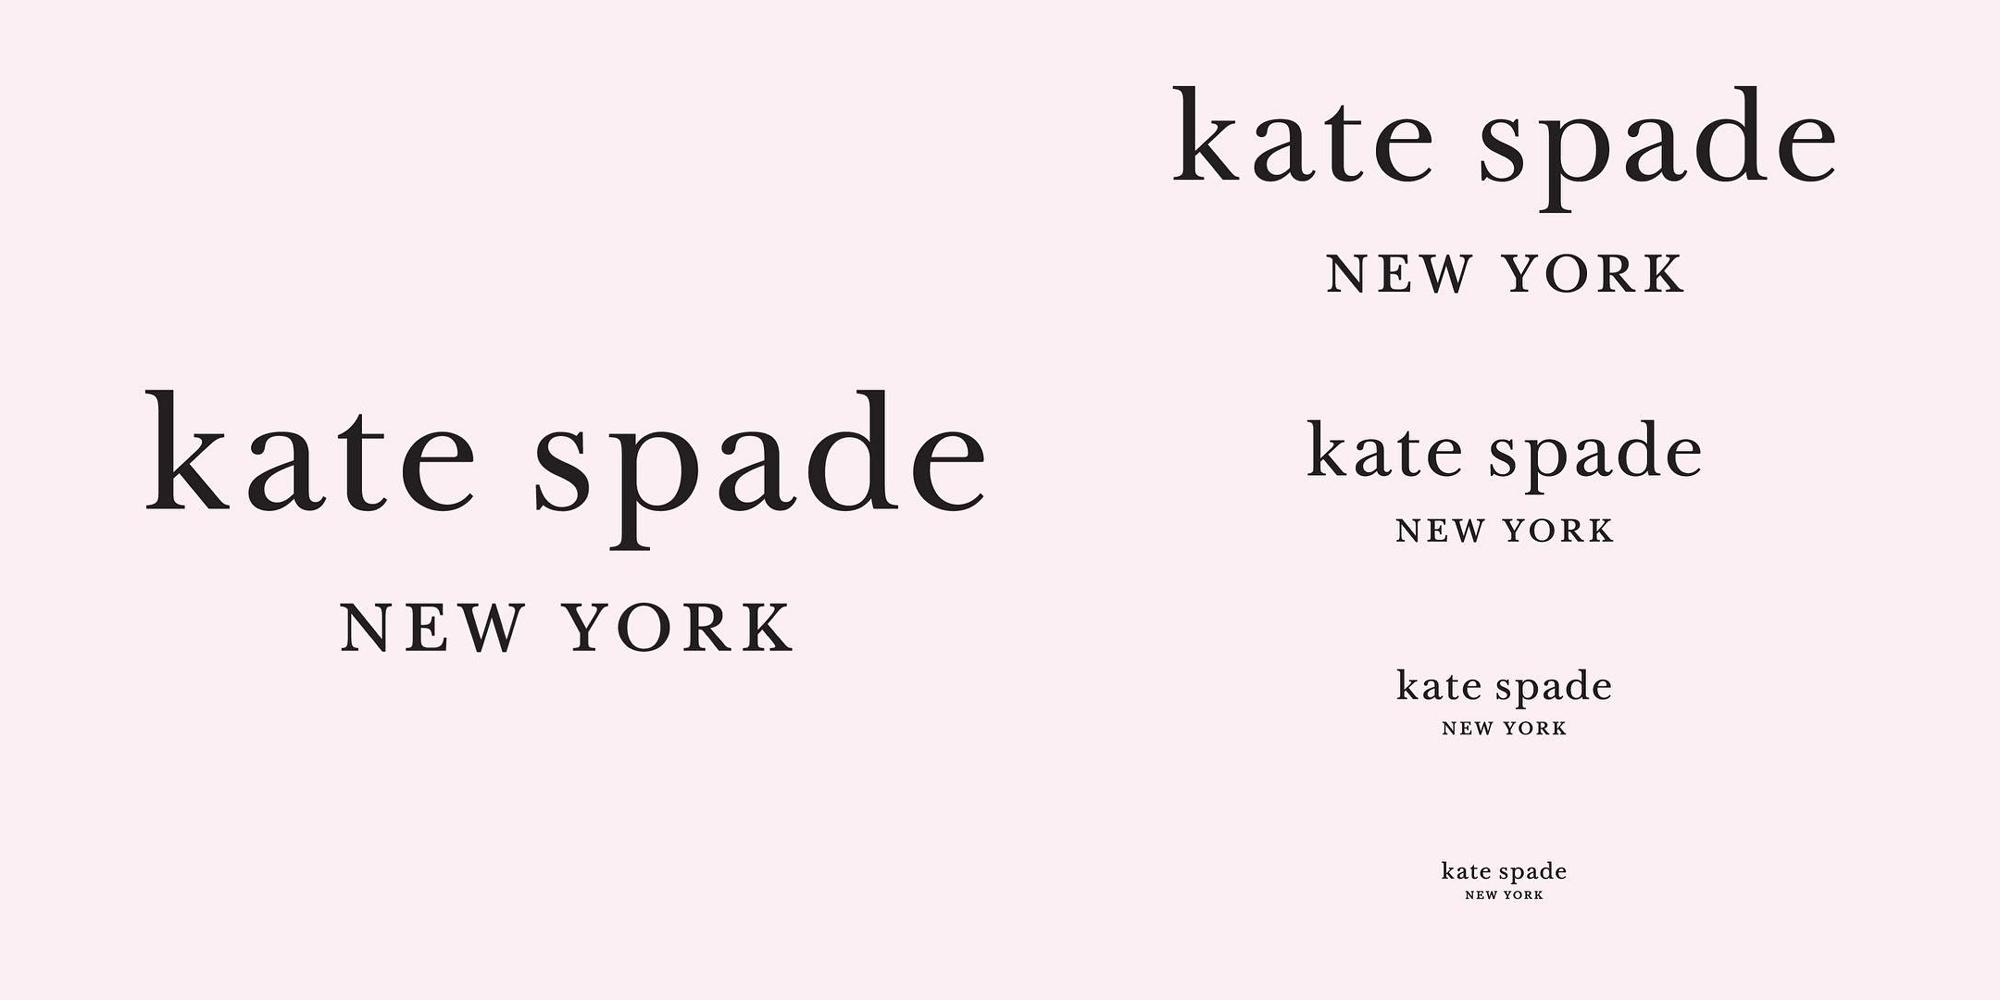 Kate Spade Size Chart